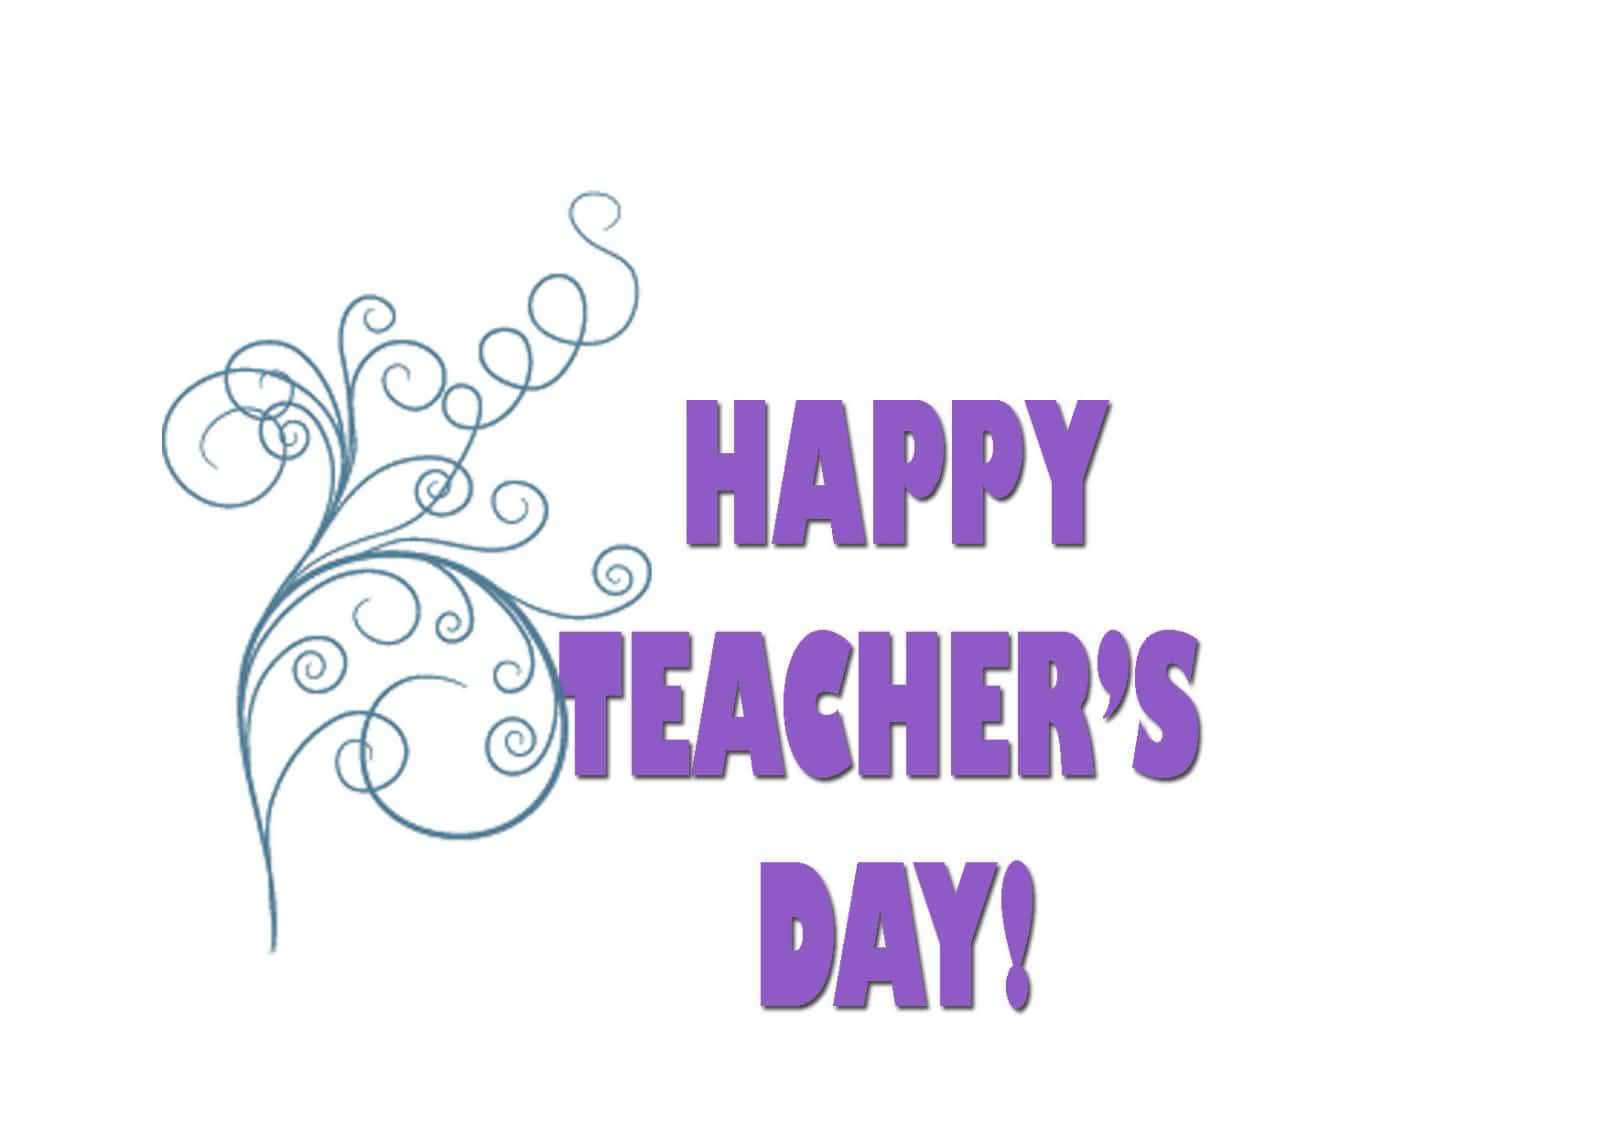 Happy Teachers Day - A Purple And Blue Swirly Design